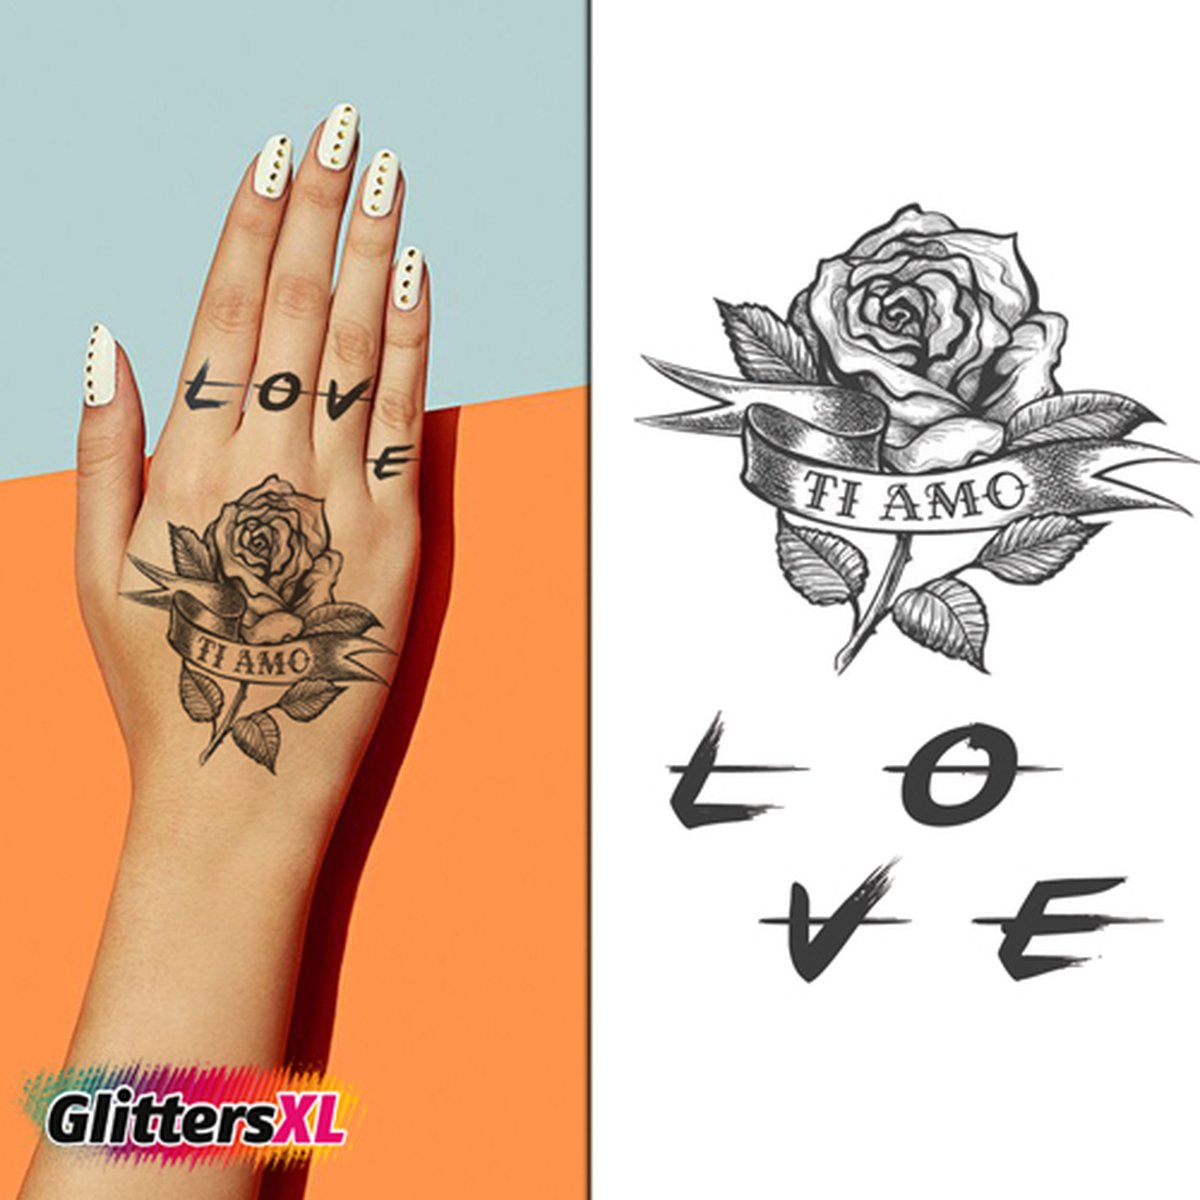 GlittersXL - Temporary Tattoo Bloem Love (11x8cm) [Neptattoo - Tijdelijke tatoeage - Nep Fake Tattoos - Water overdraagbare festival sticker henna outfit tattoo - Glitter tattoo - Volwassenen Kinderen Jongen Meisje]